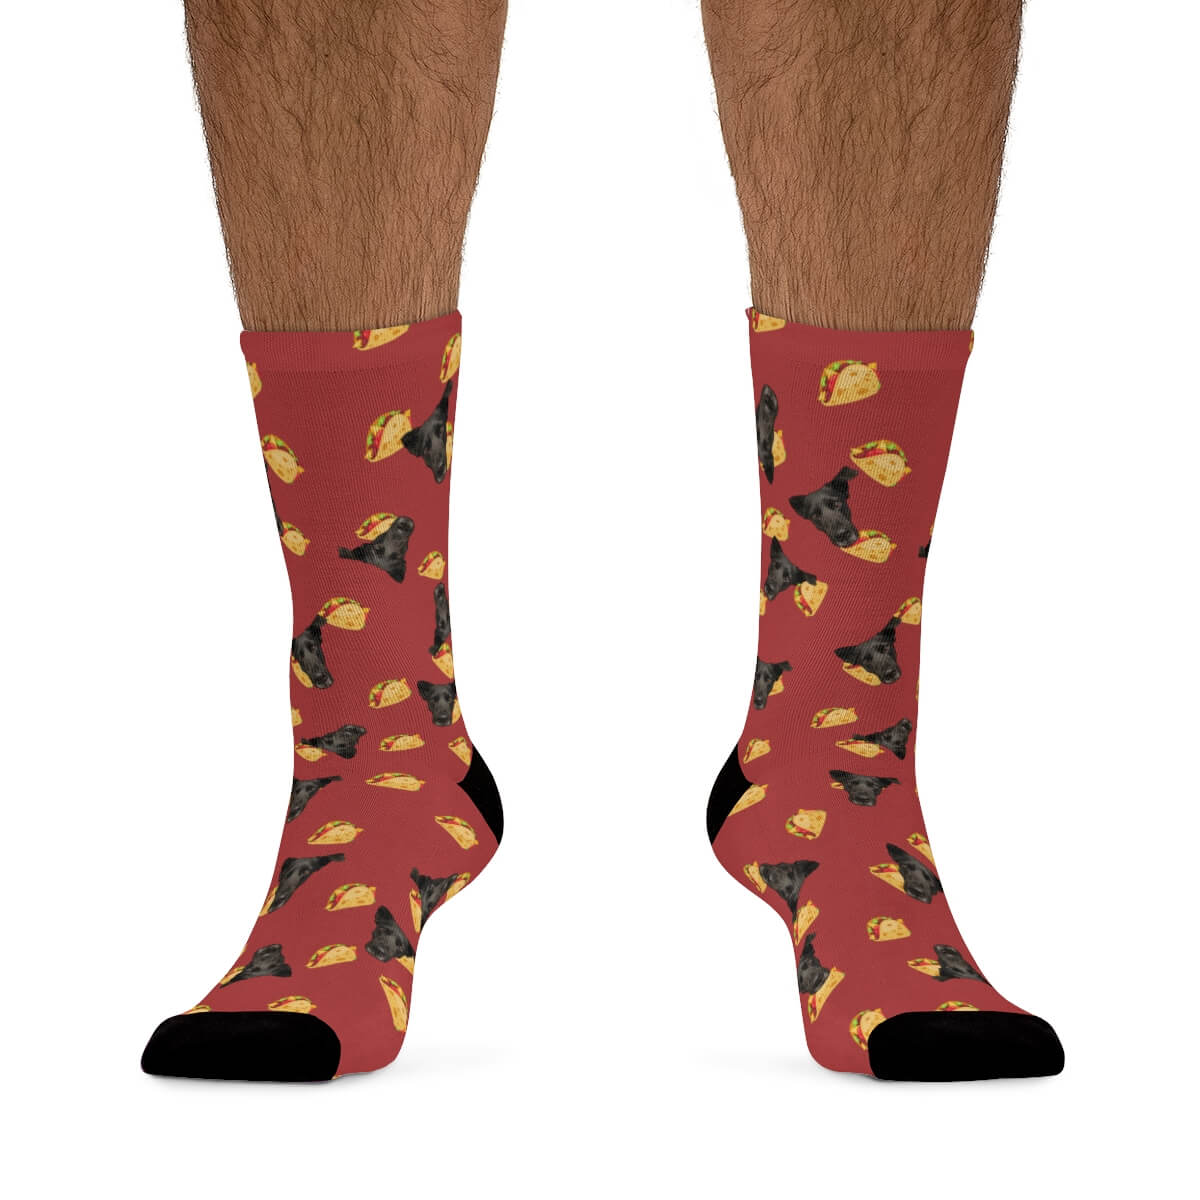 Custom Socks - Tacos